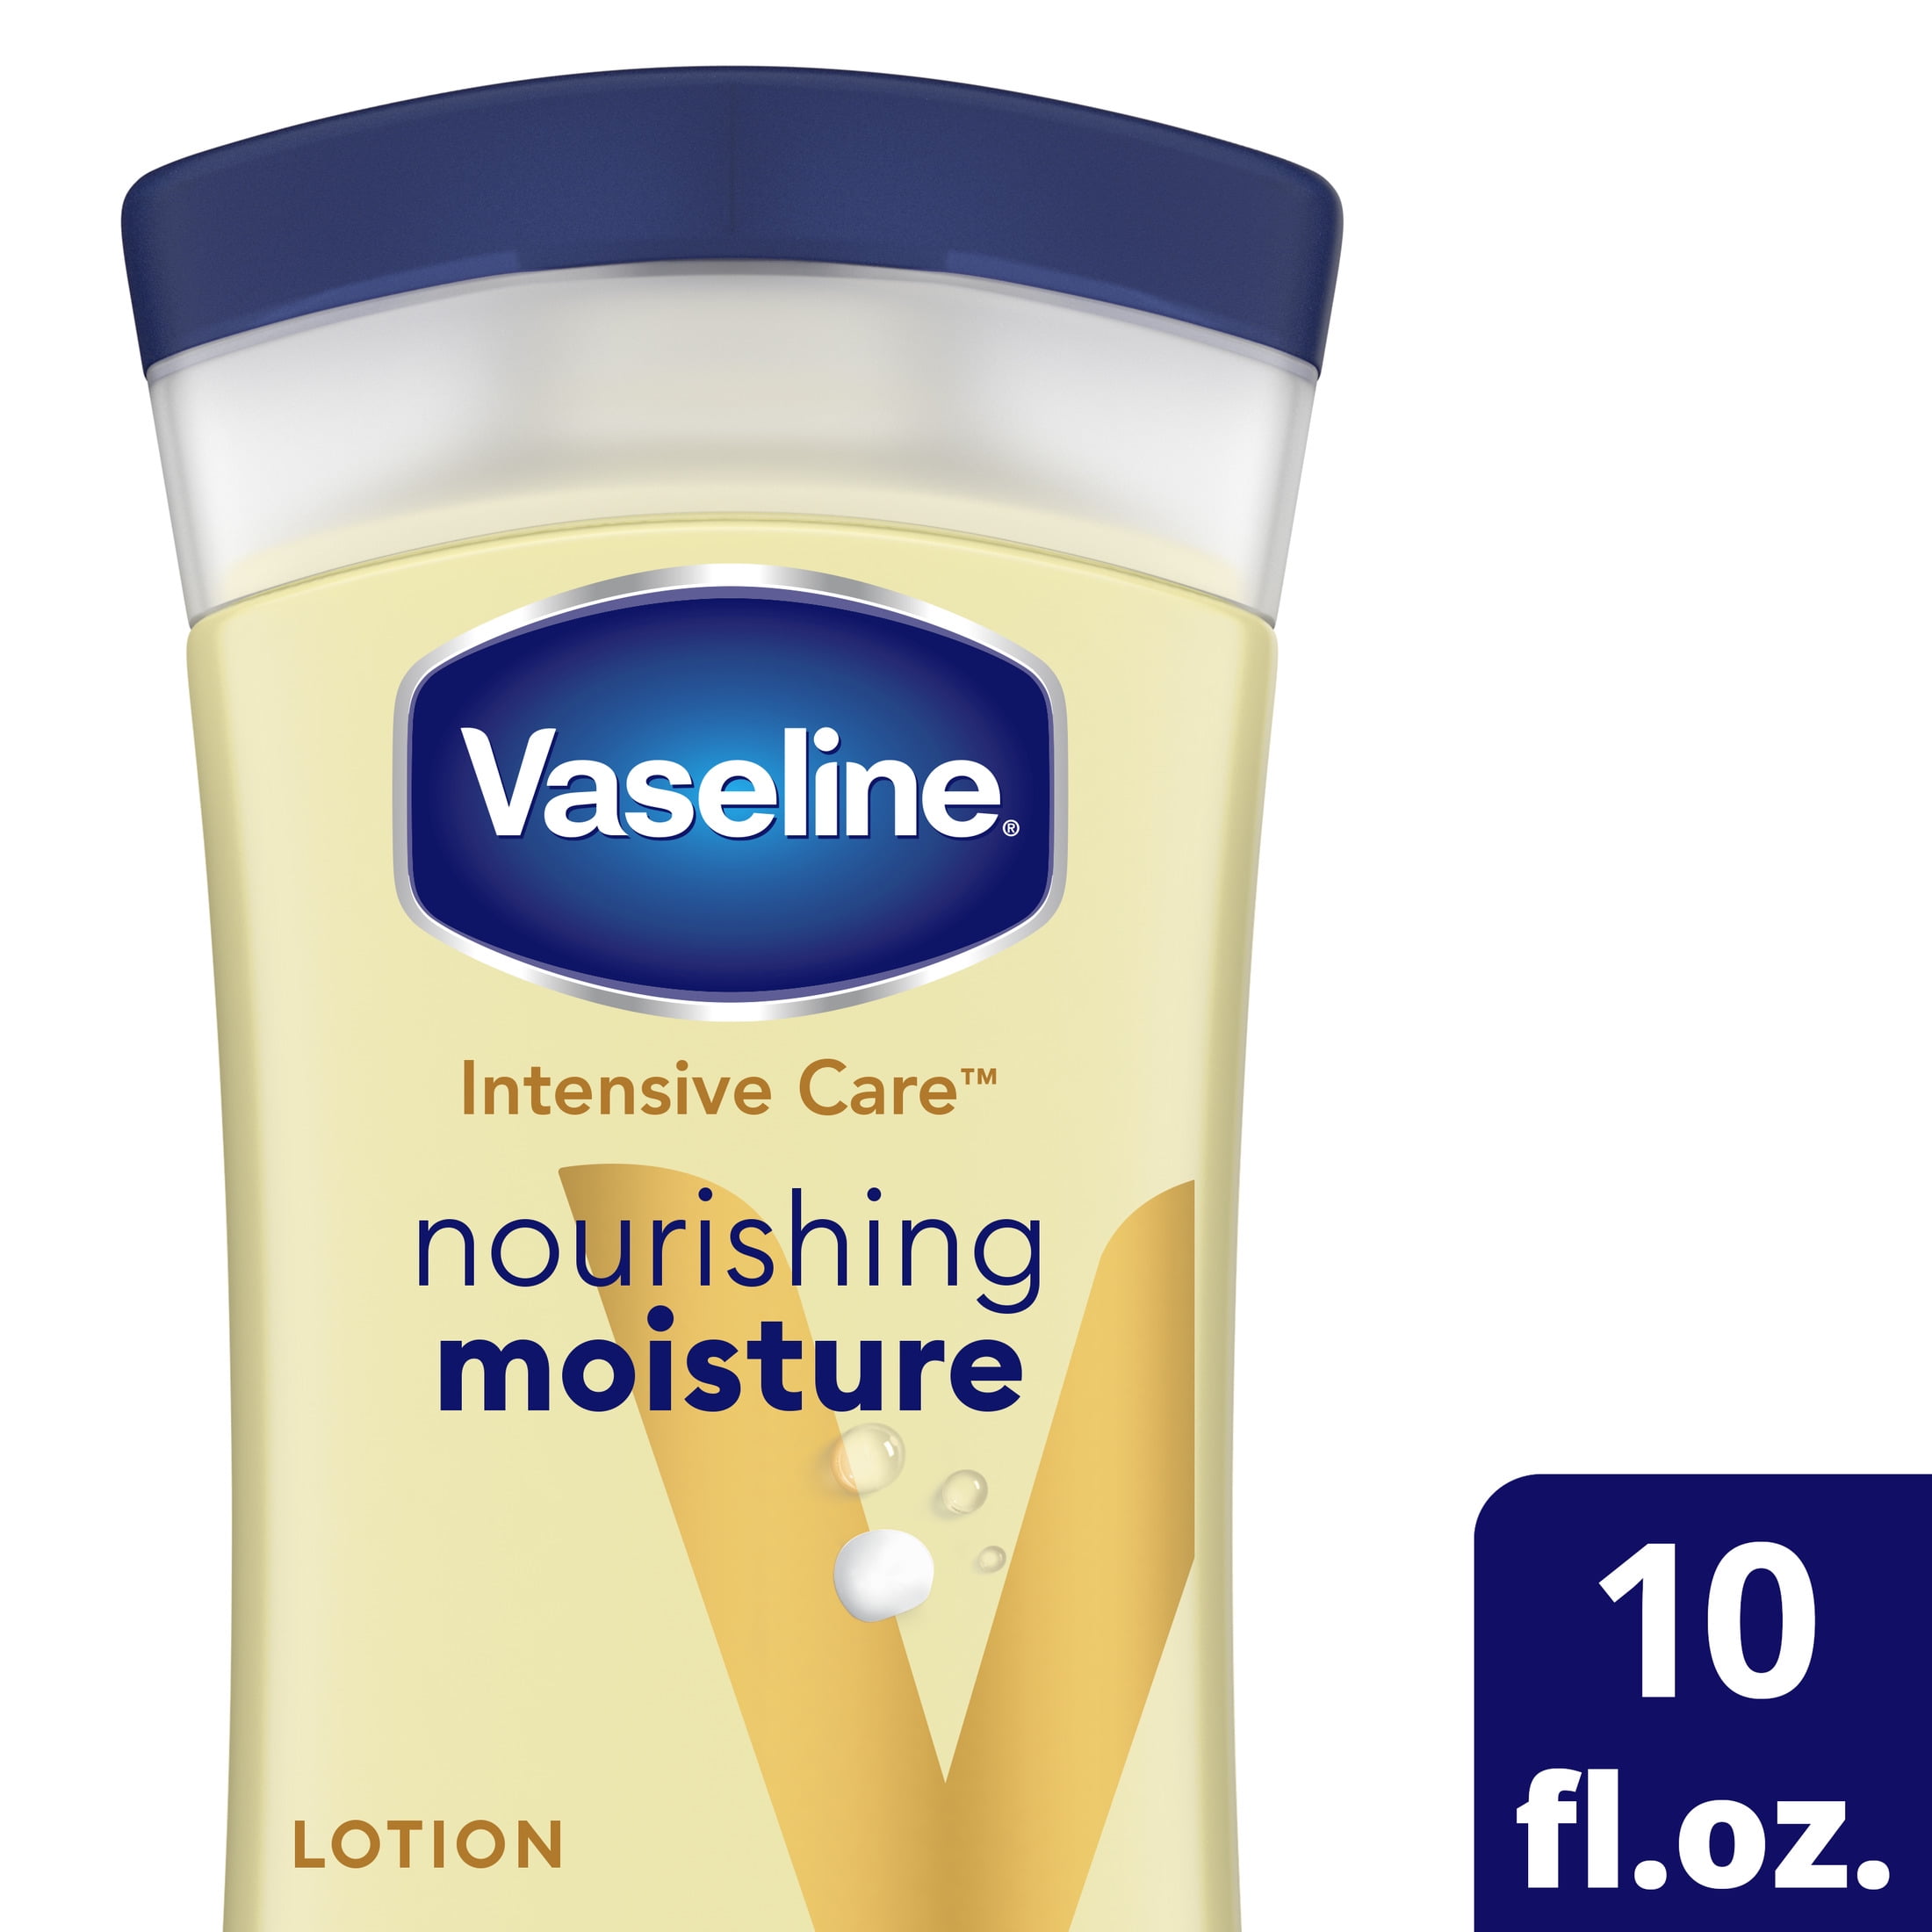 Vaseline Intensive Care Nourishing Moisture Body Lotion, 10 oz